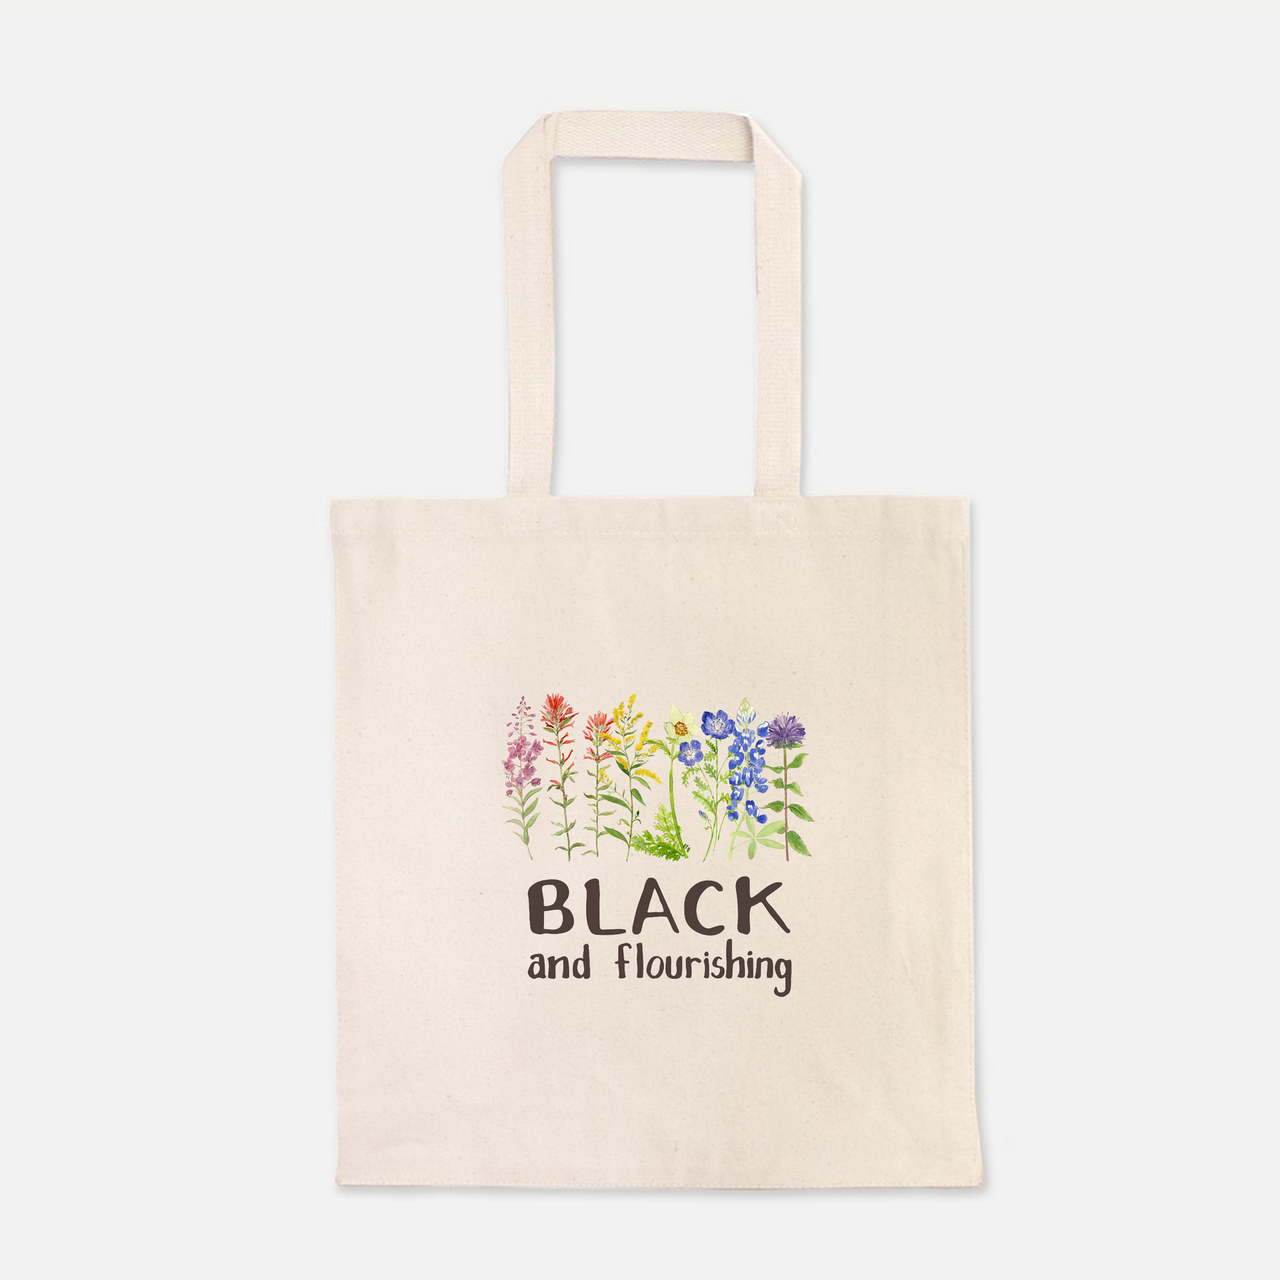 Black and flourishing tote bag